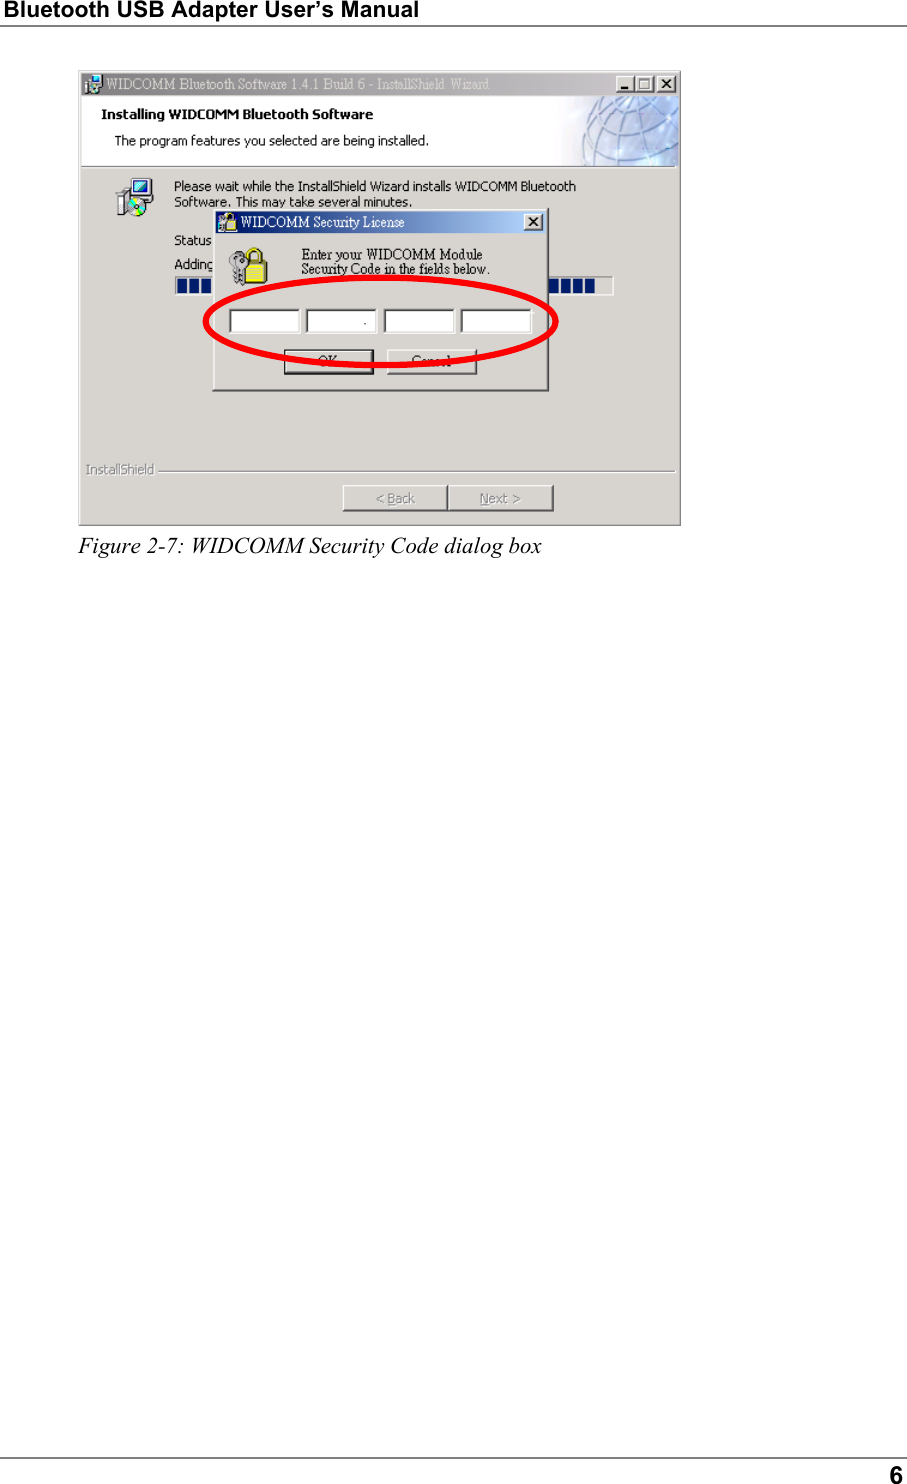 Bluetooth USB Adapter User’s Manual6Figure 2-7: WIDCOMM Security Code dialog box